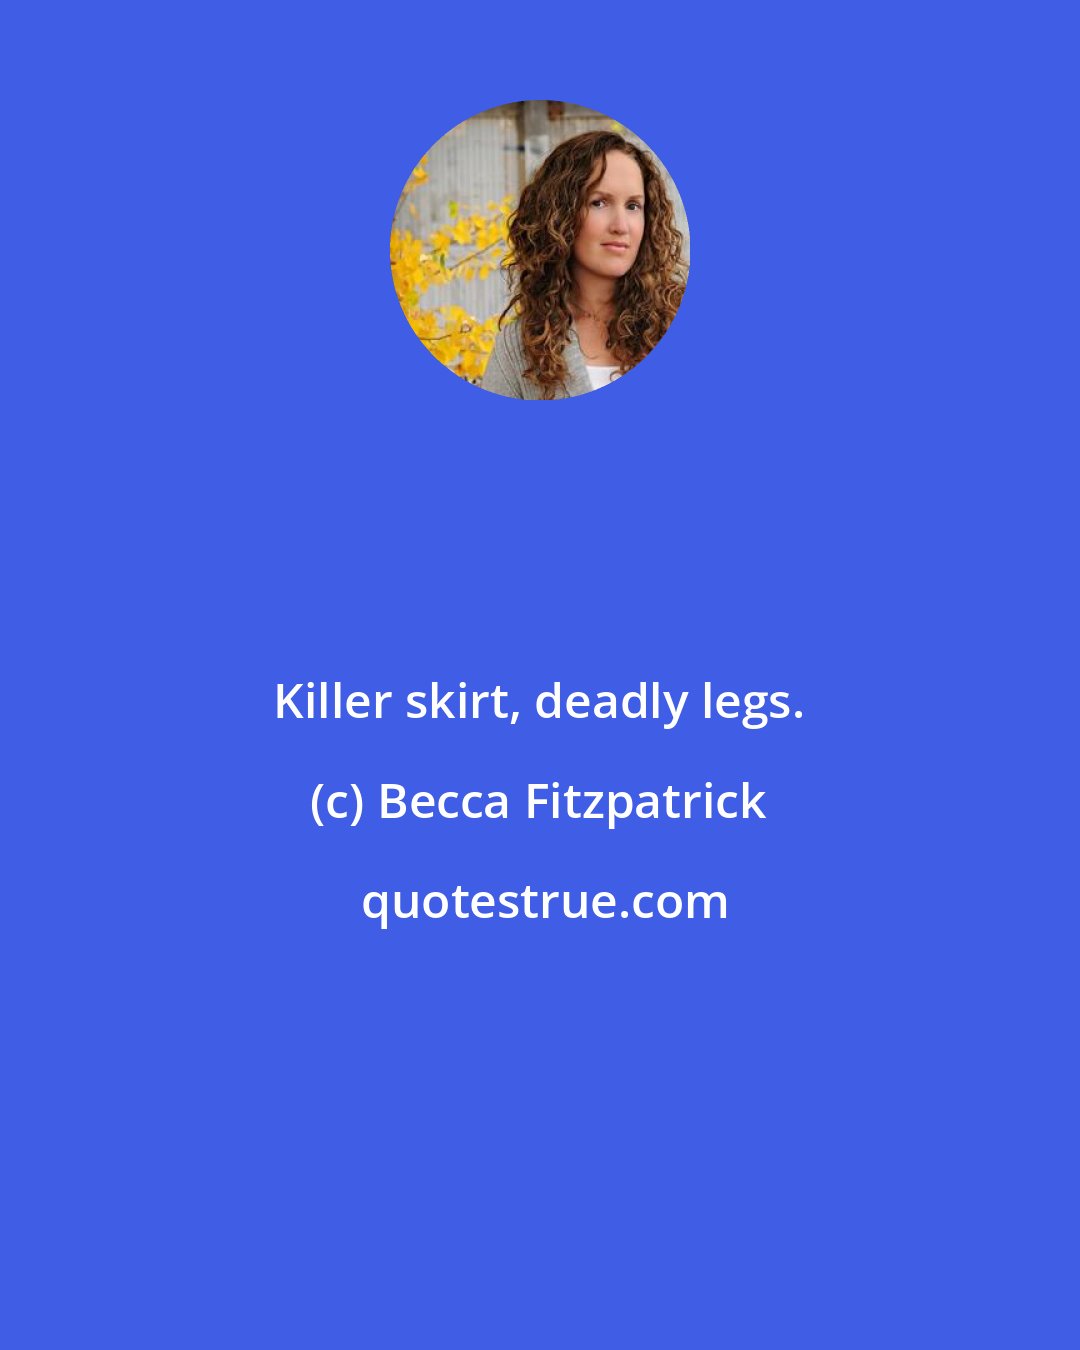 Becca Fitzpatrick: Killer skirt, deadly legs.